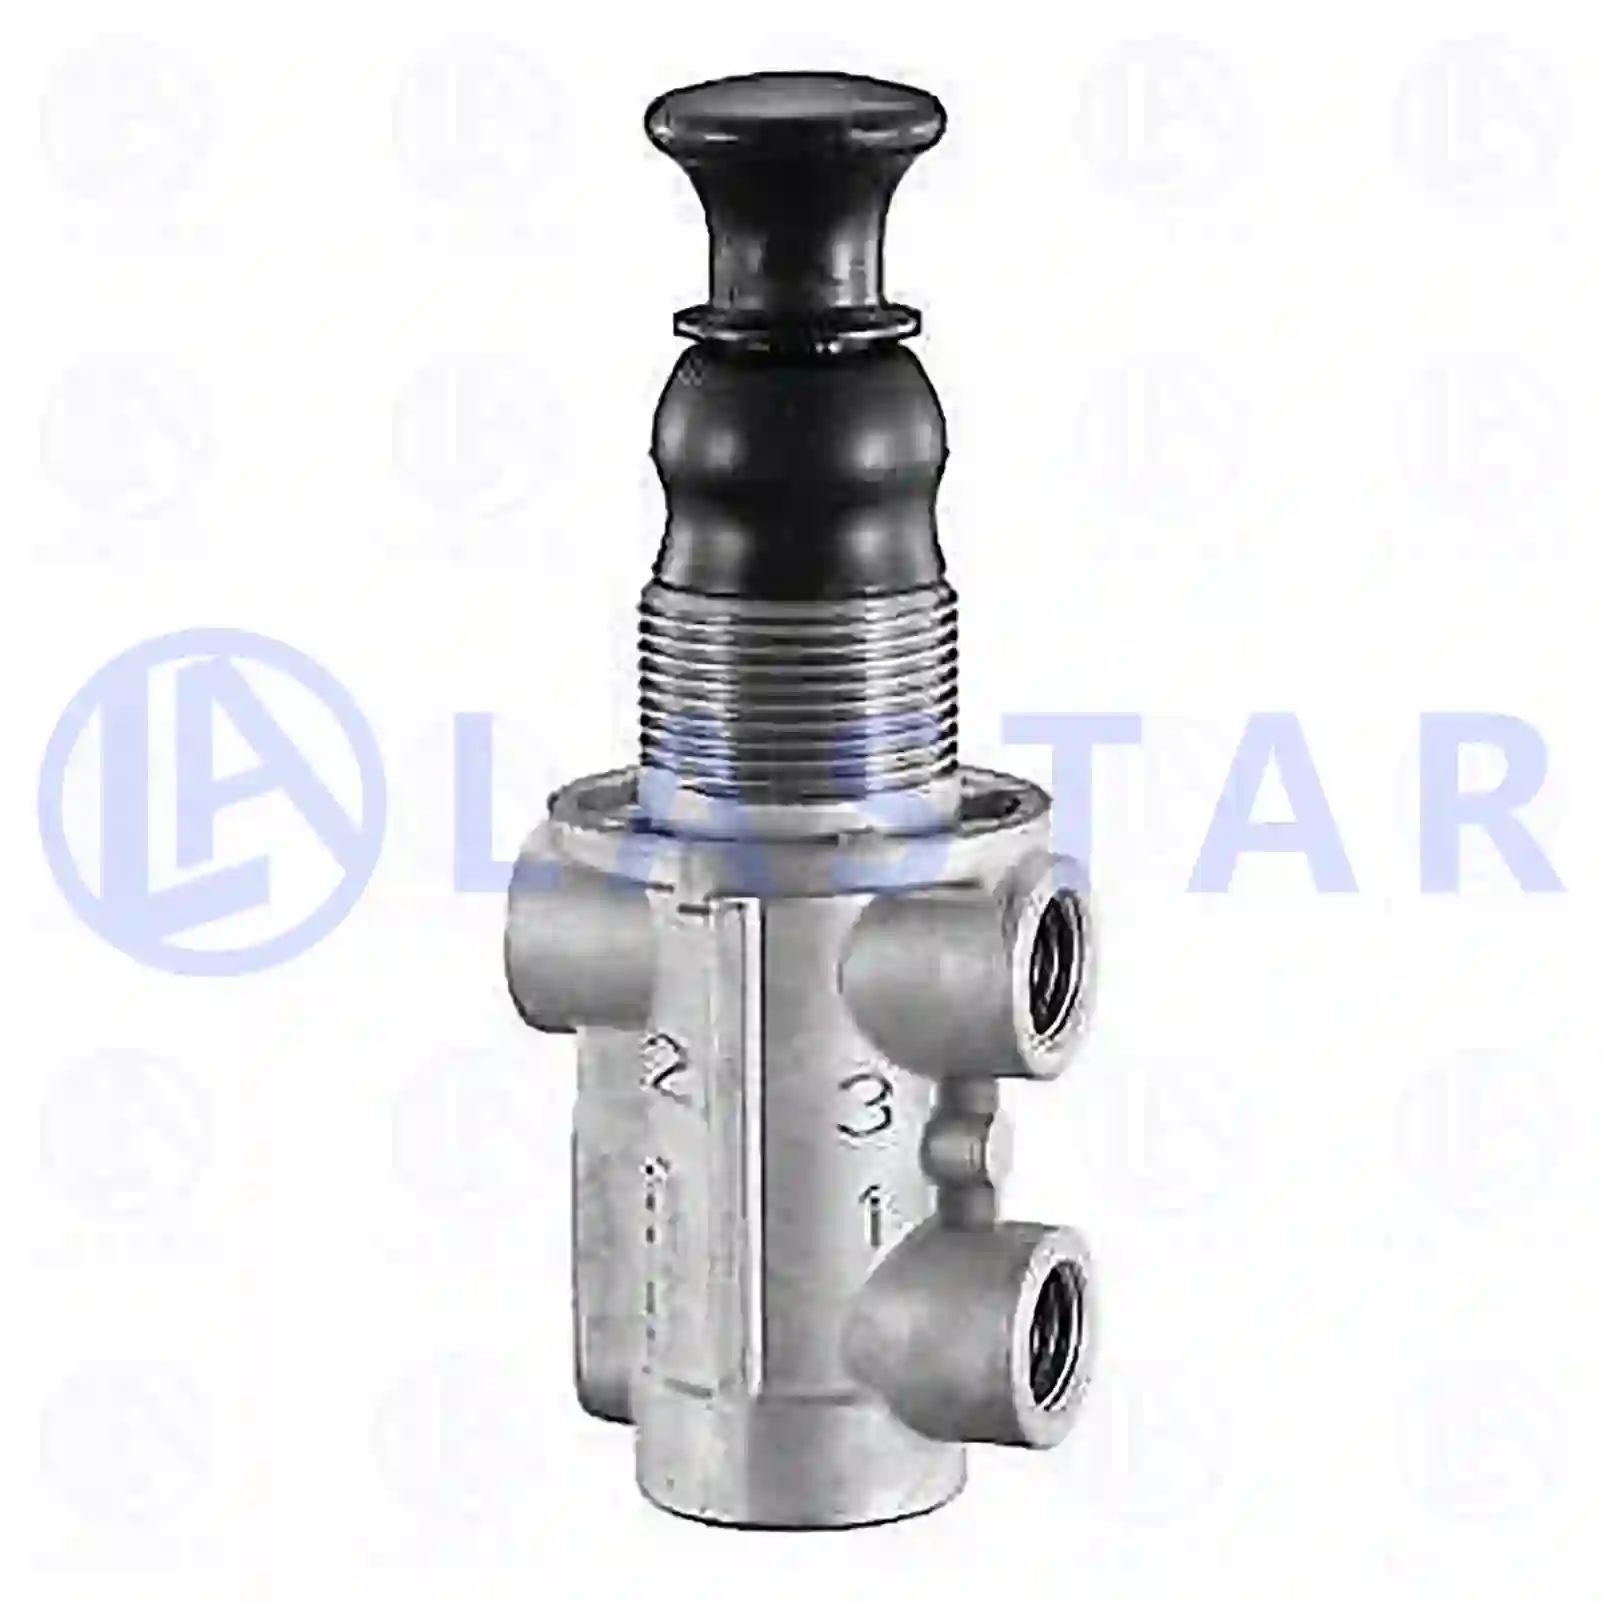  Multiway valve || Lastar Spare Part | Truck Spare Parts, Auotomotive Spare Parts